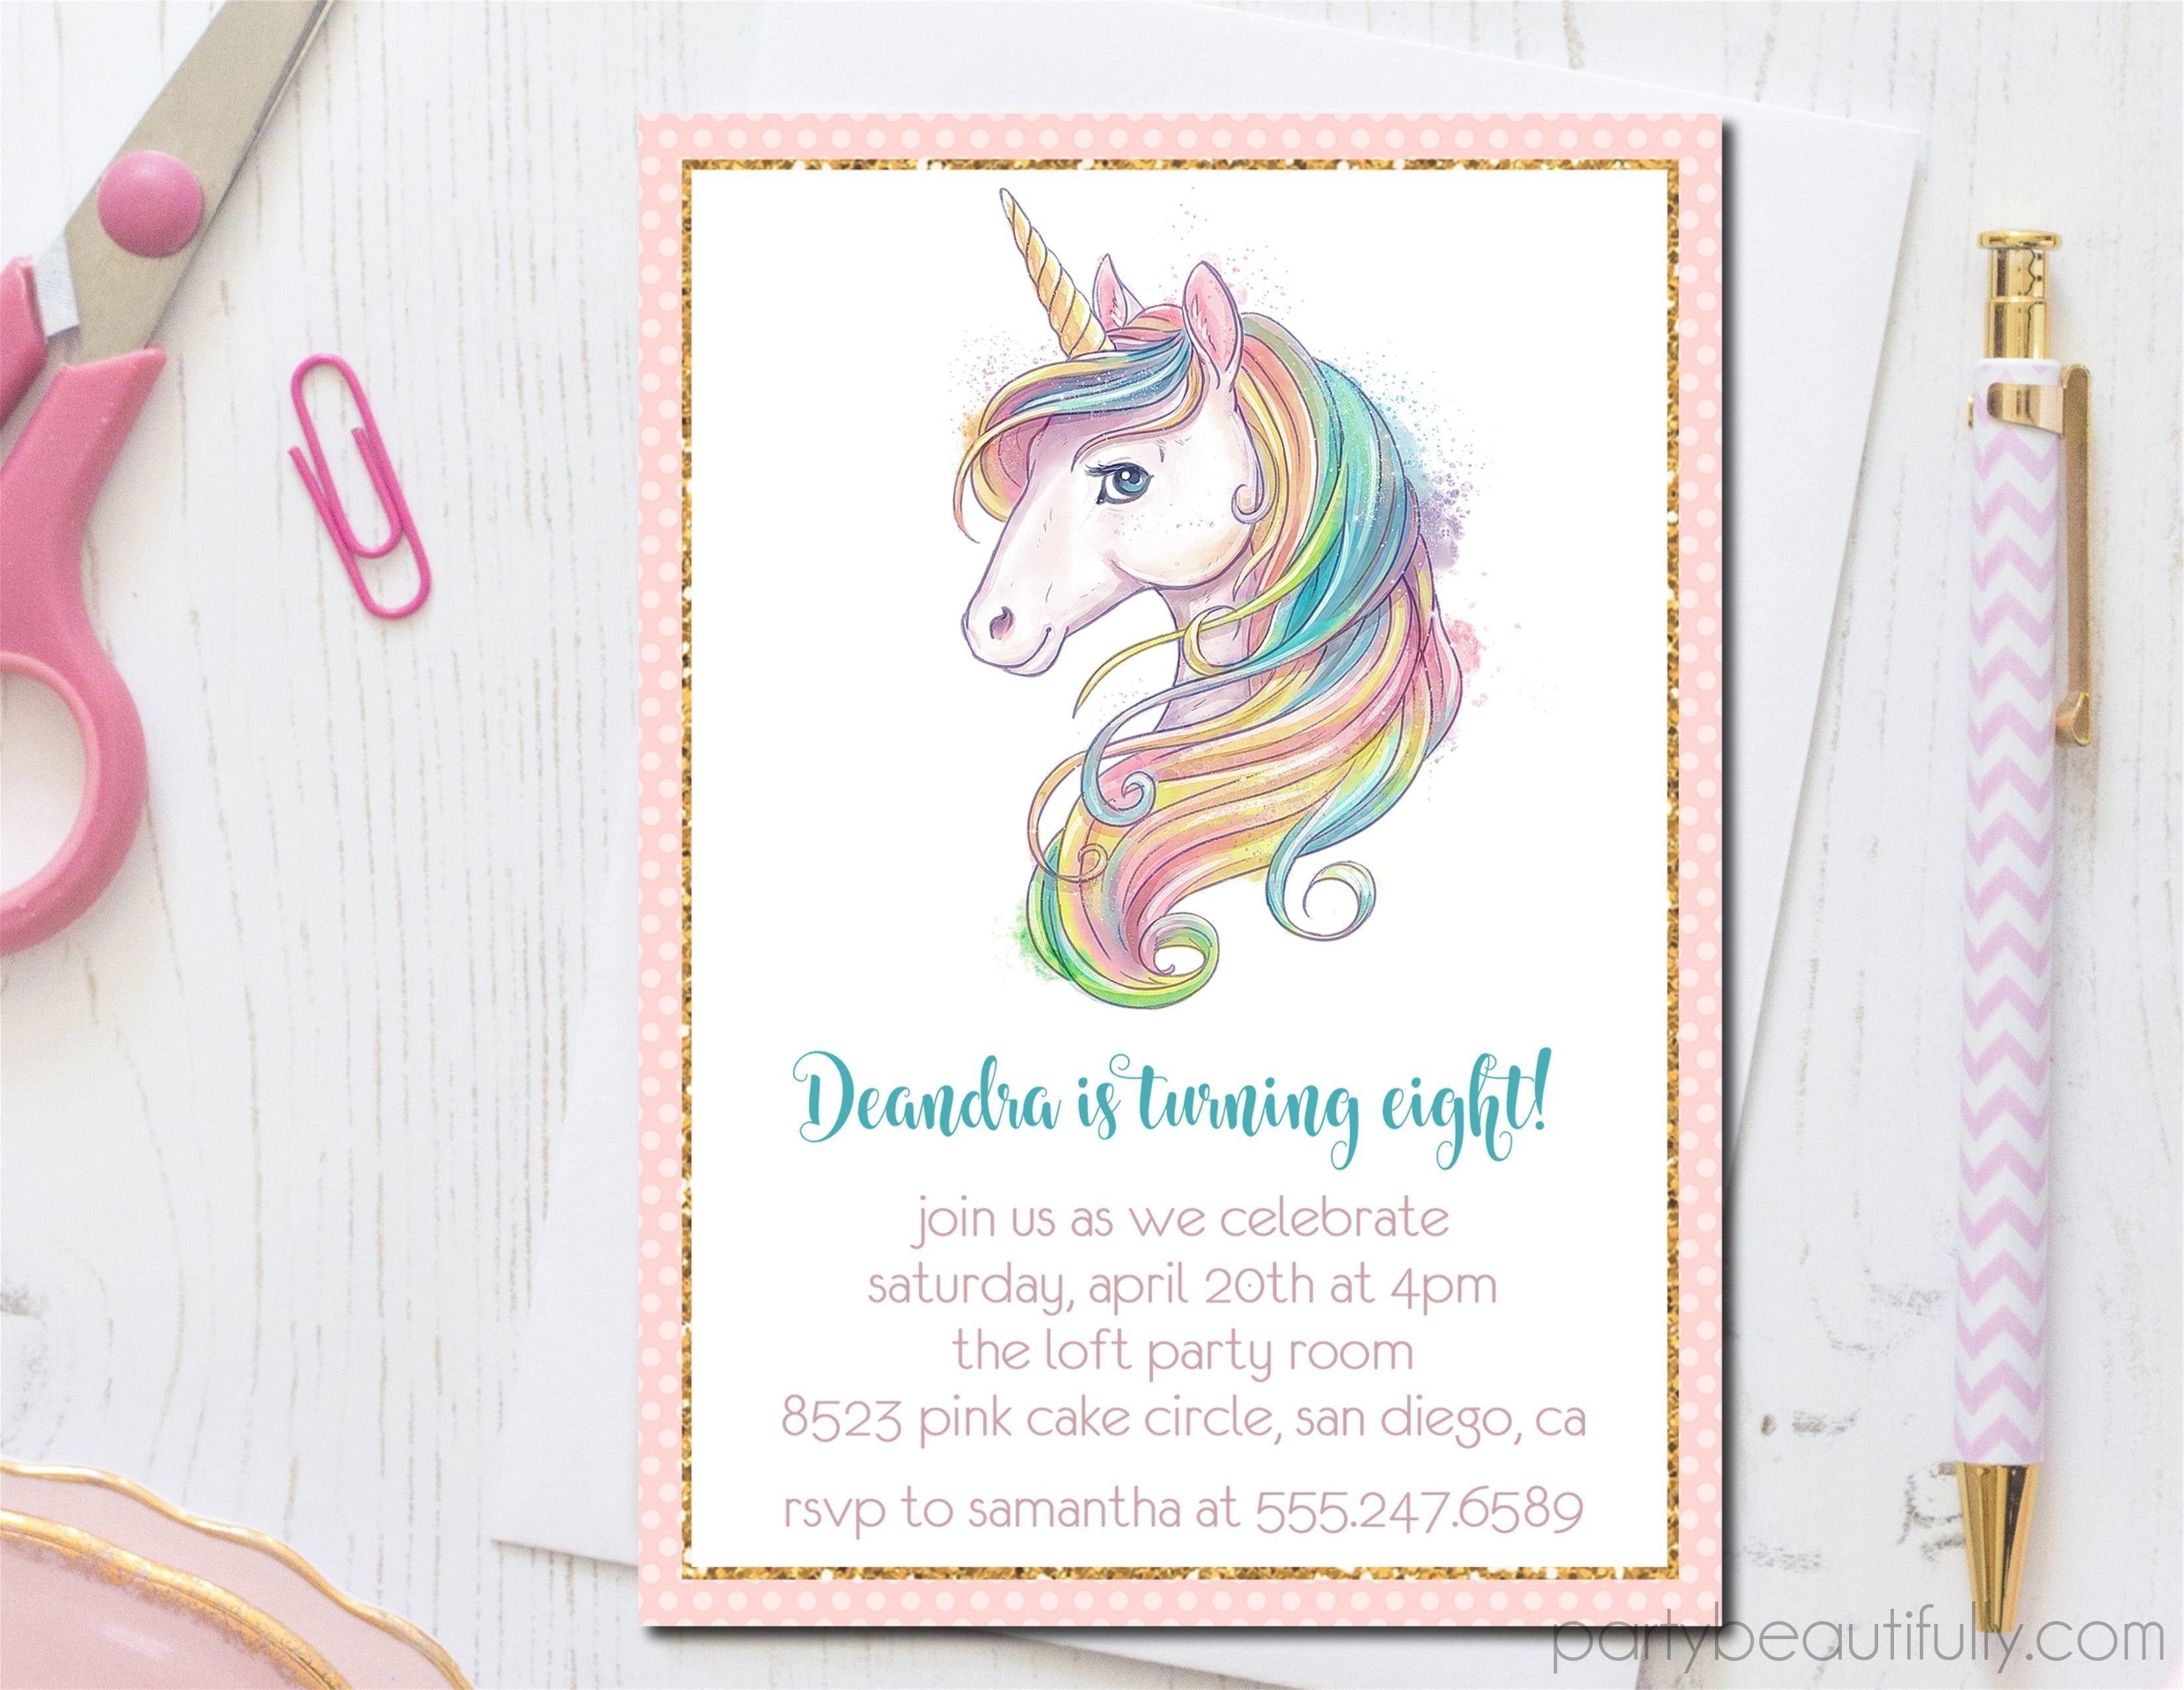 Unicorn Birthday Party Invitations